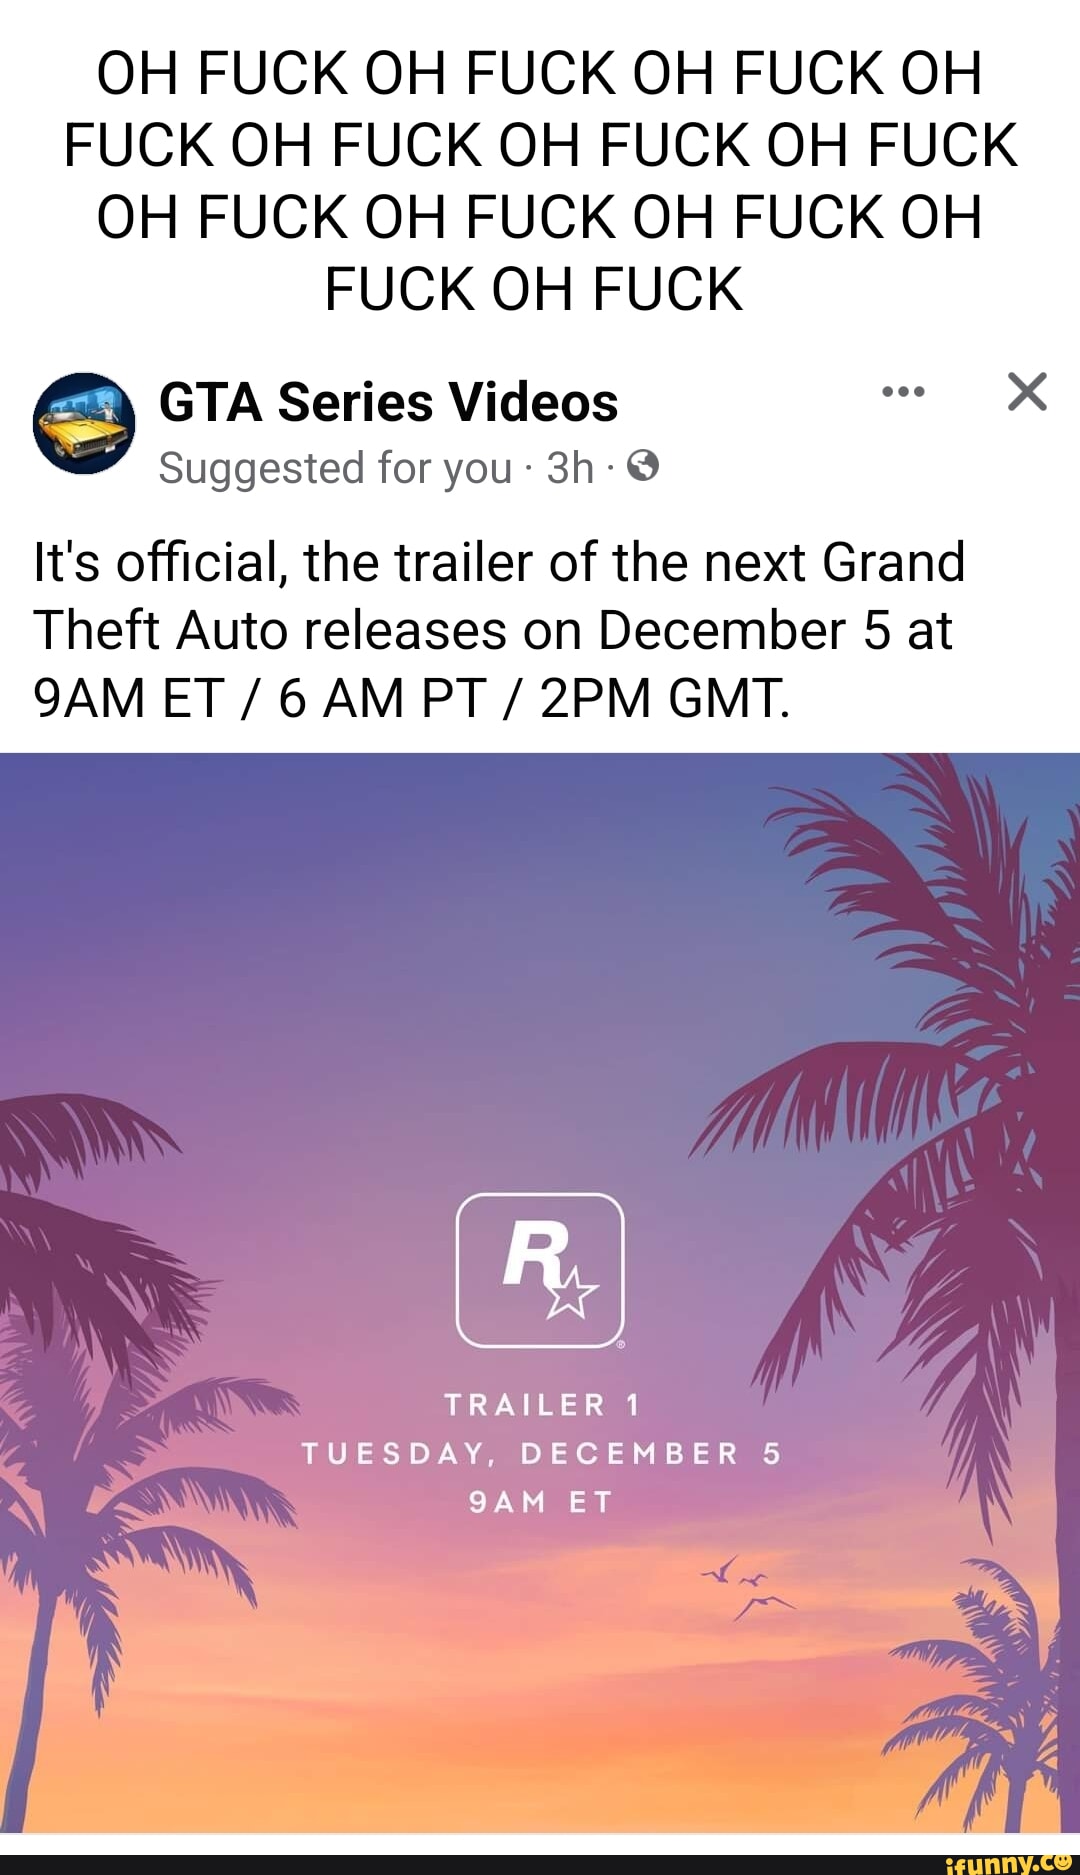 GTA Series Videos 